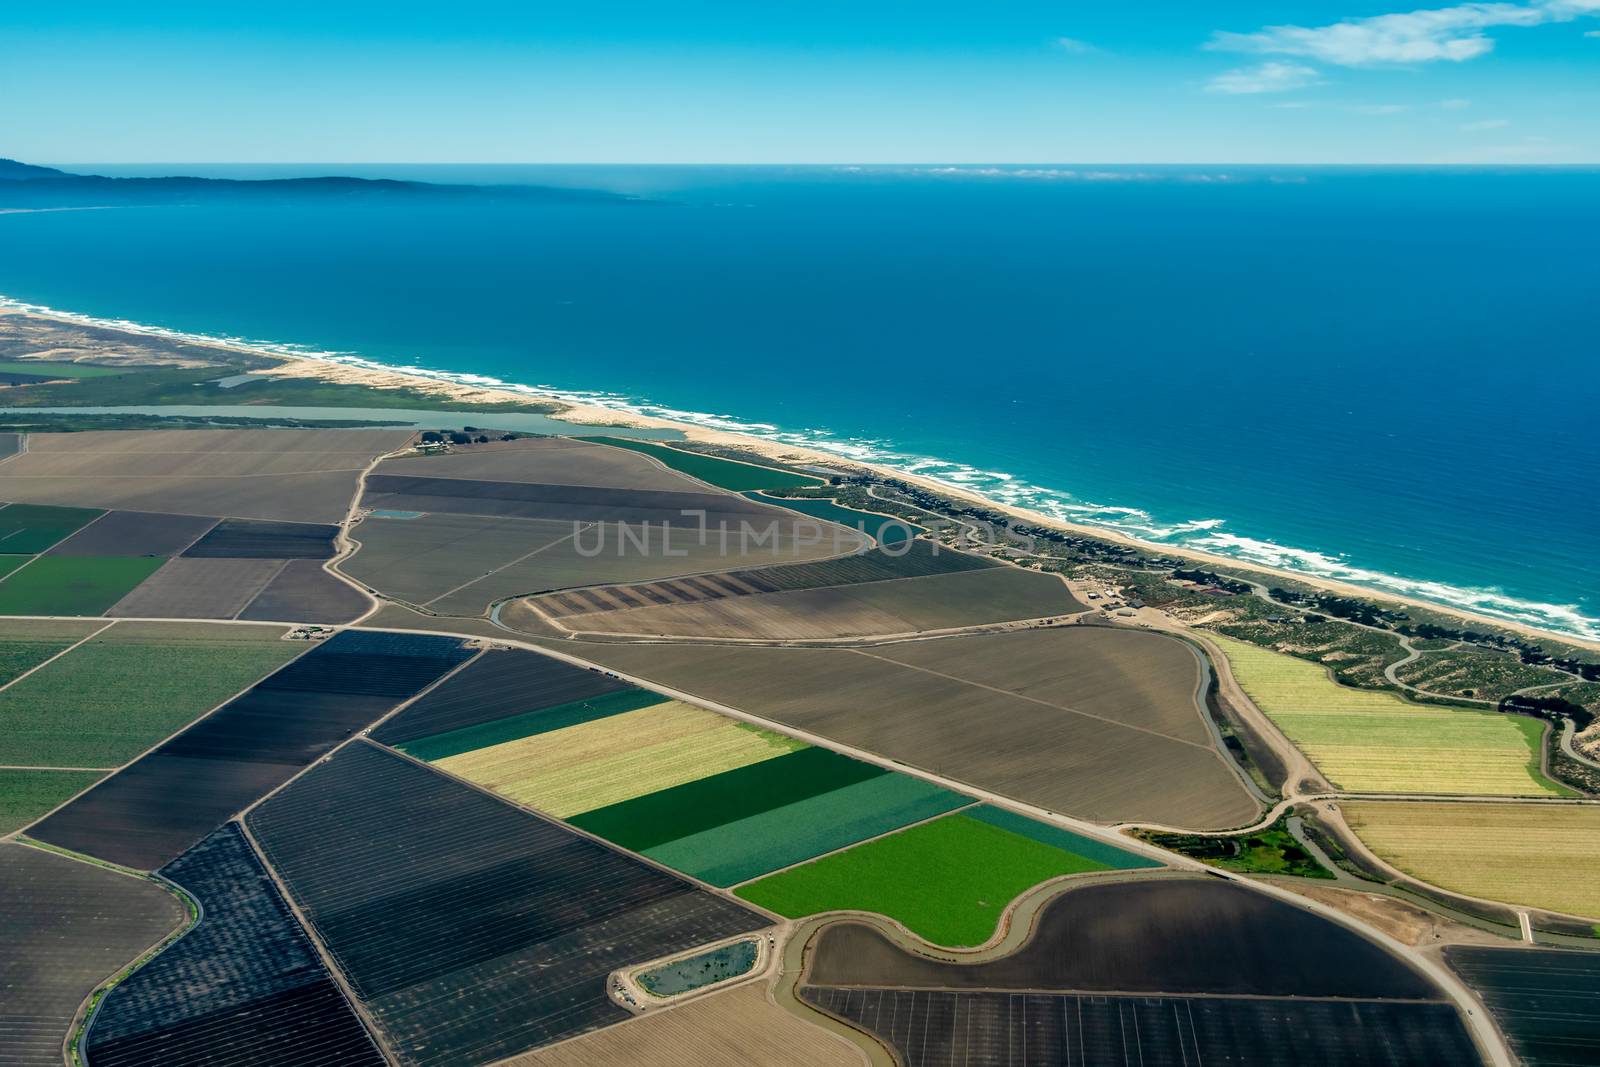 Farmland on Pacific Coast in California by whitechild